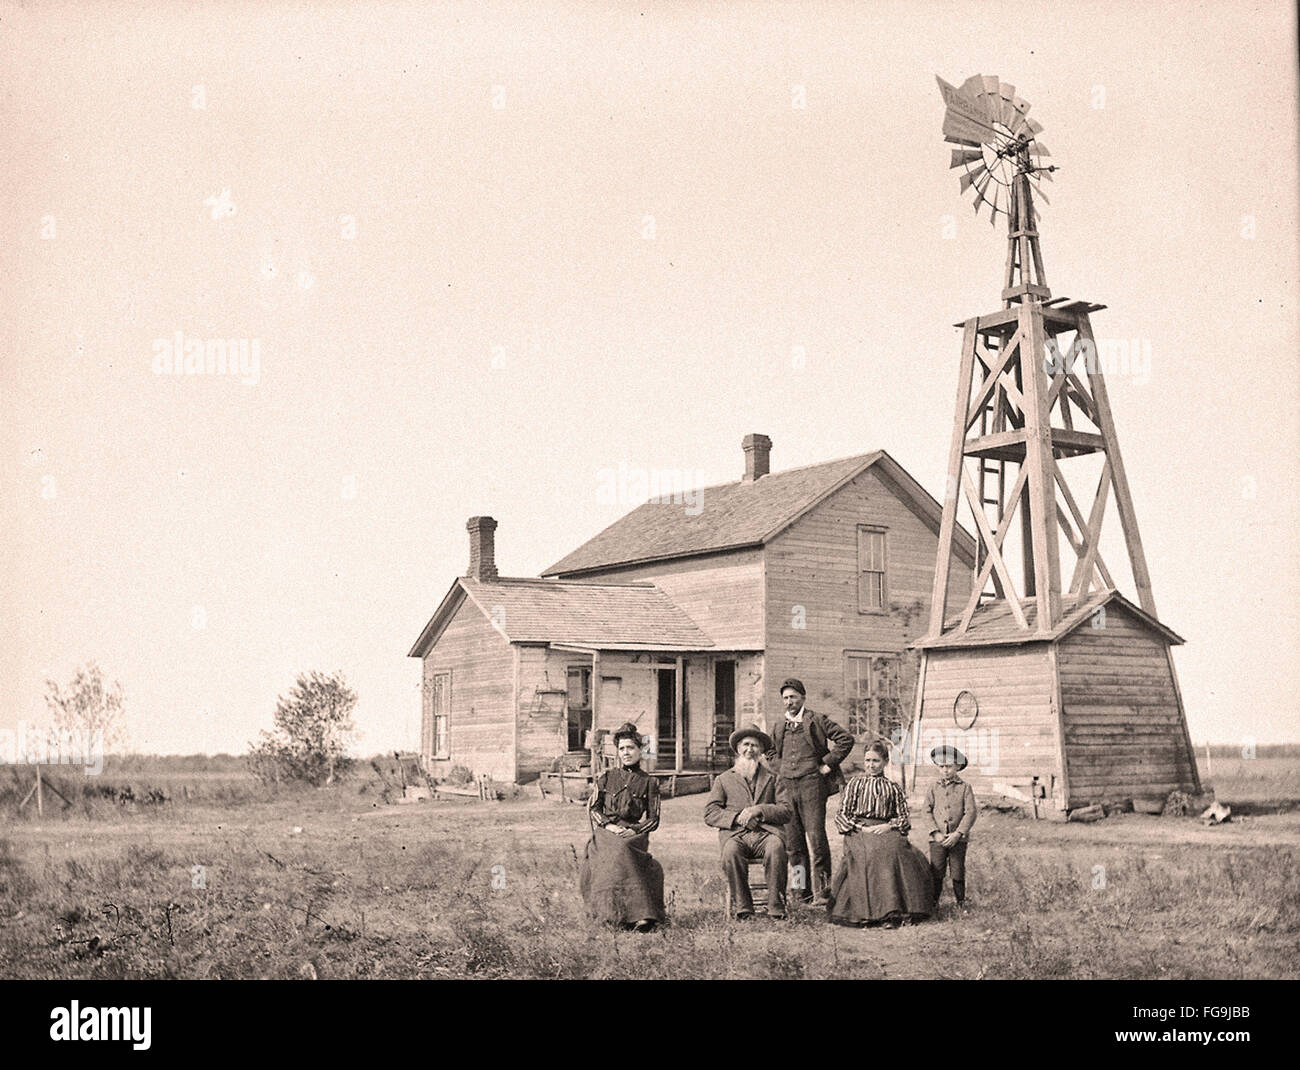 A farm -  Nebraska - 1890s Stock Photo